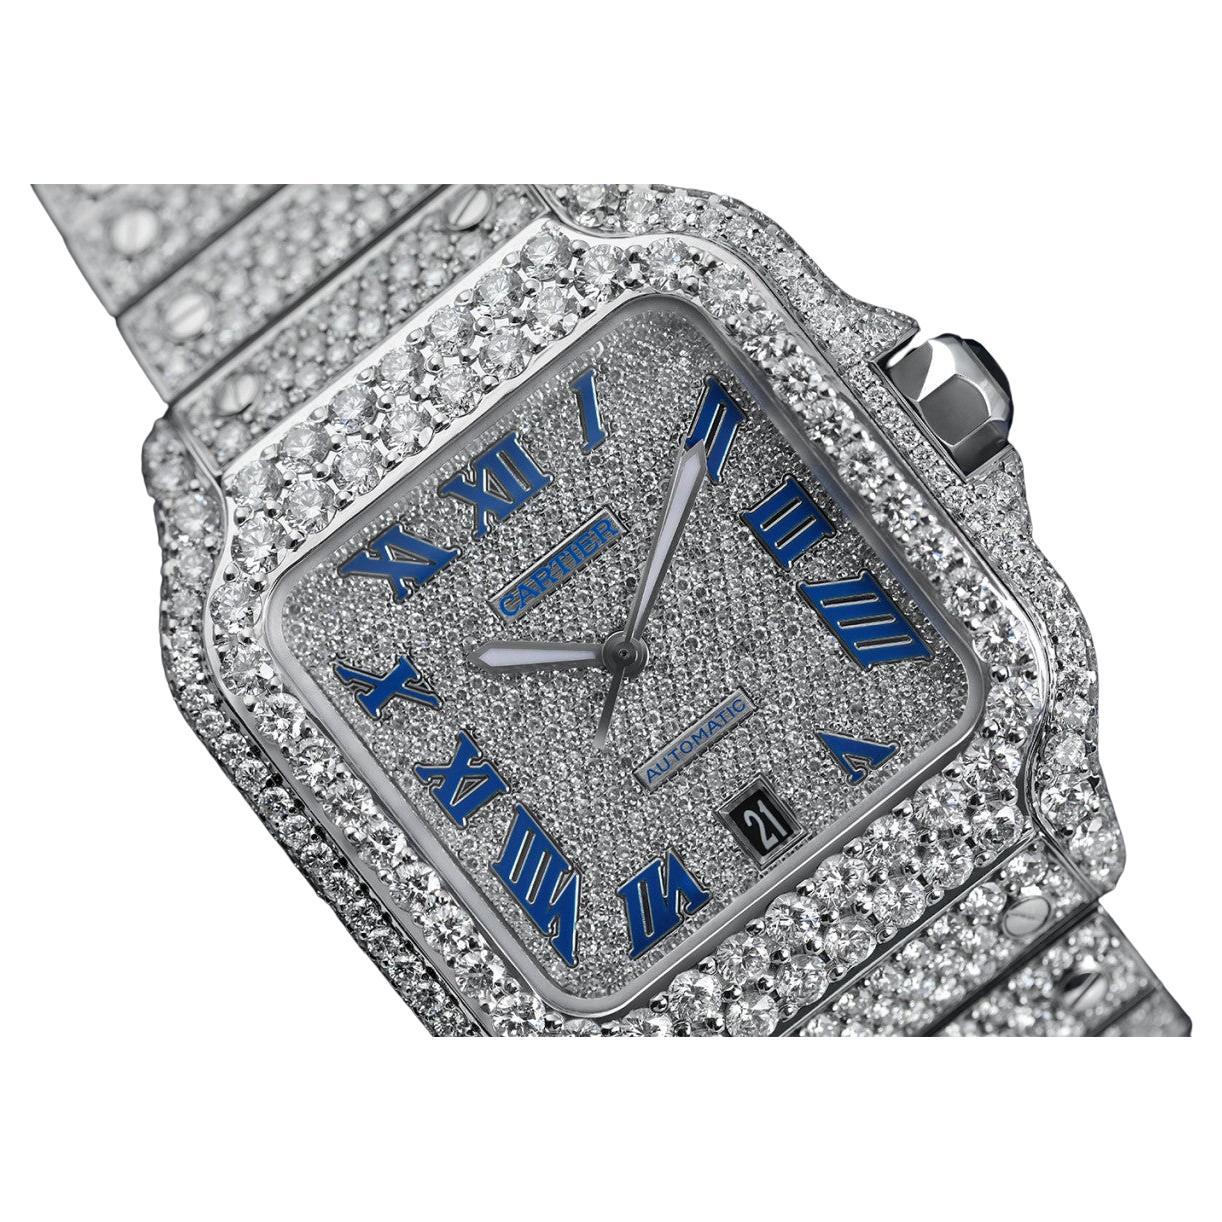 Cartier Santos Large Stainless Steel Watch with Custom Diamonds WSSA0018